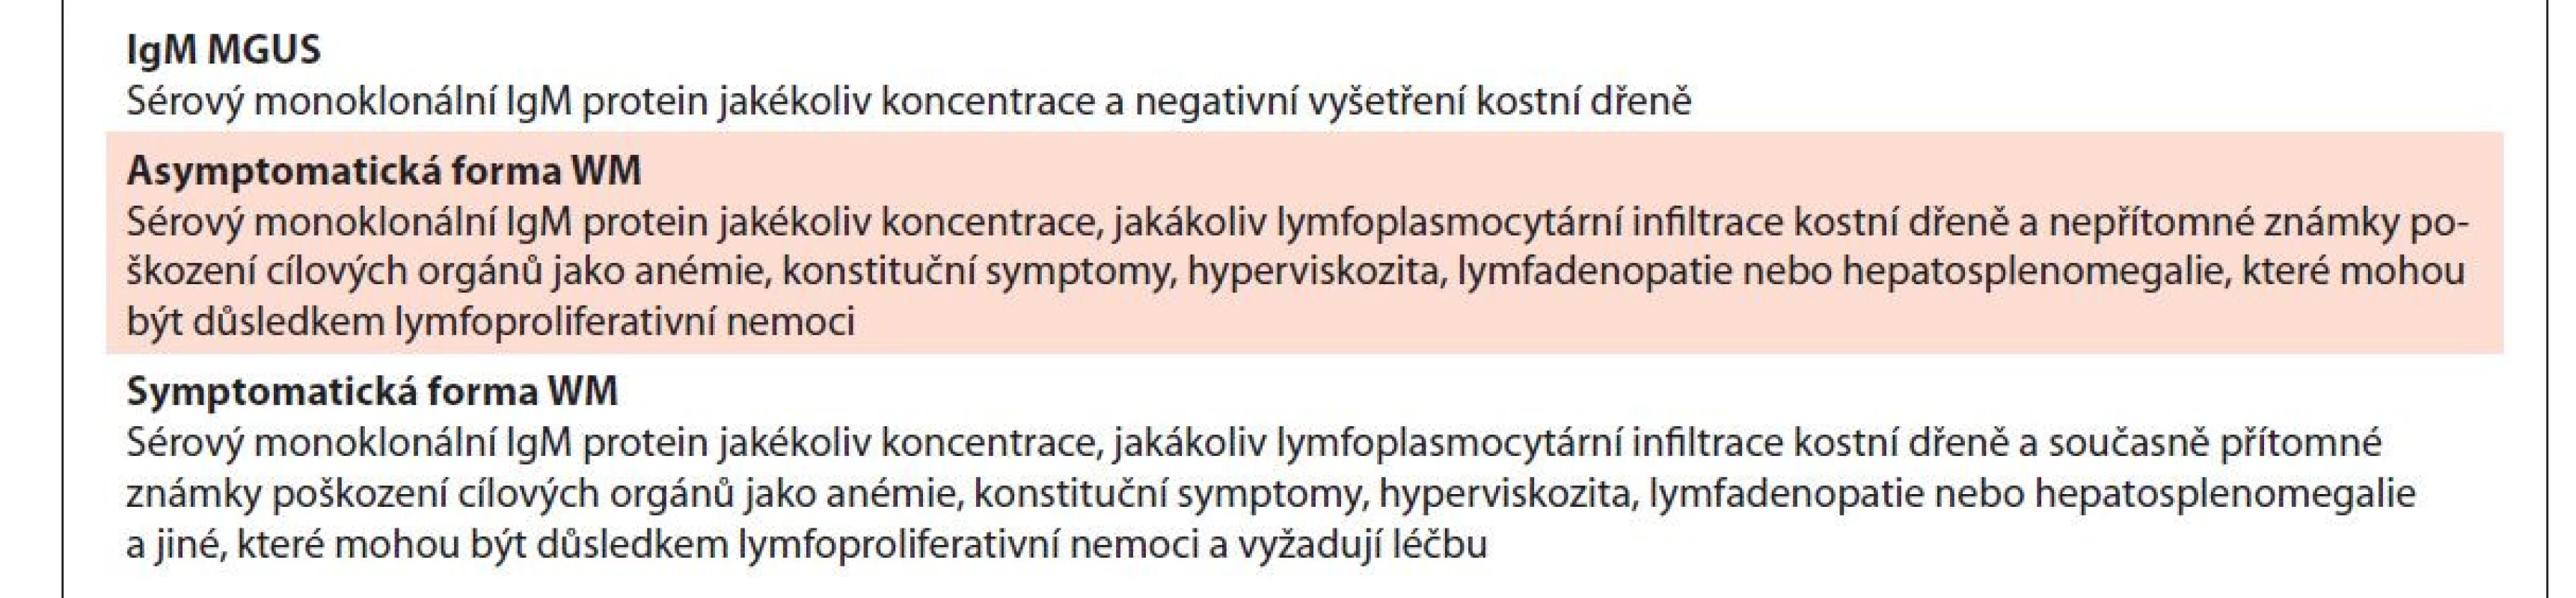 Diagnostická kritéria pro MGUS s IgM, symptomatickou a asymptomatickou WM [Owen, 2003].